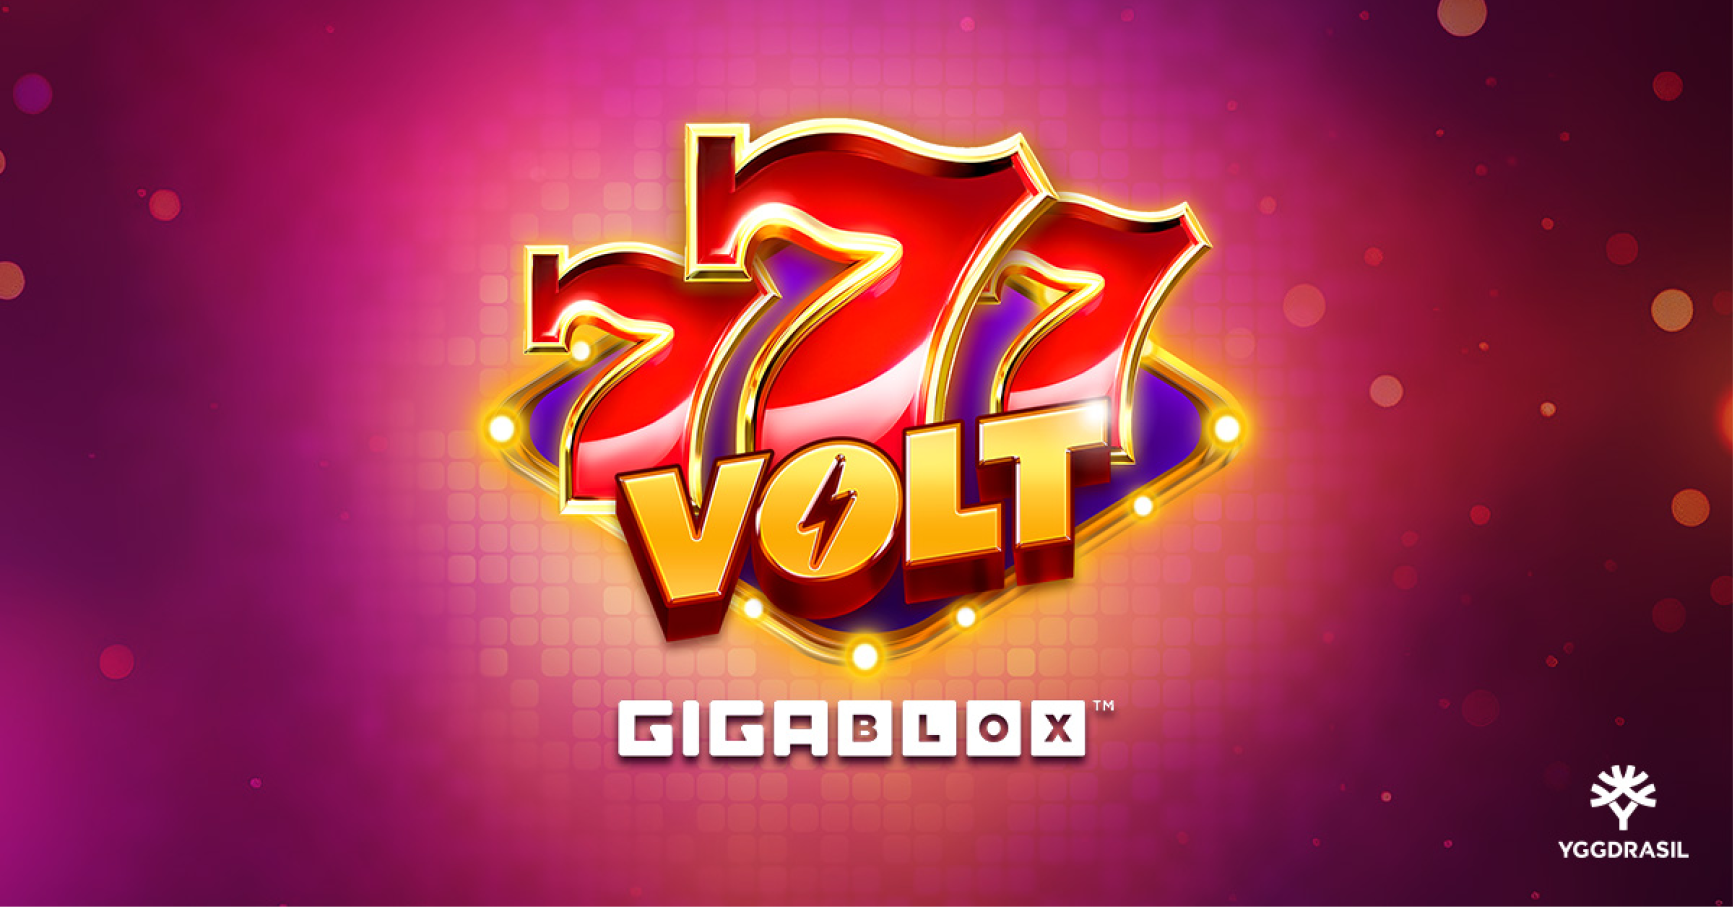 Yggdrasil turns up the power in 777 Volt Gigablox